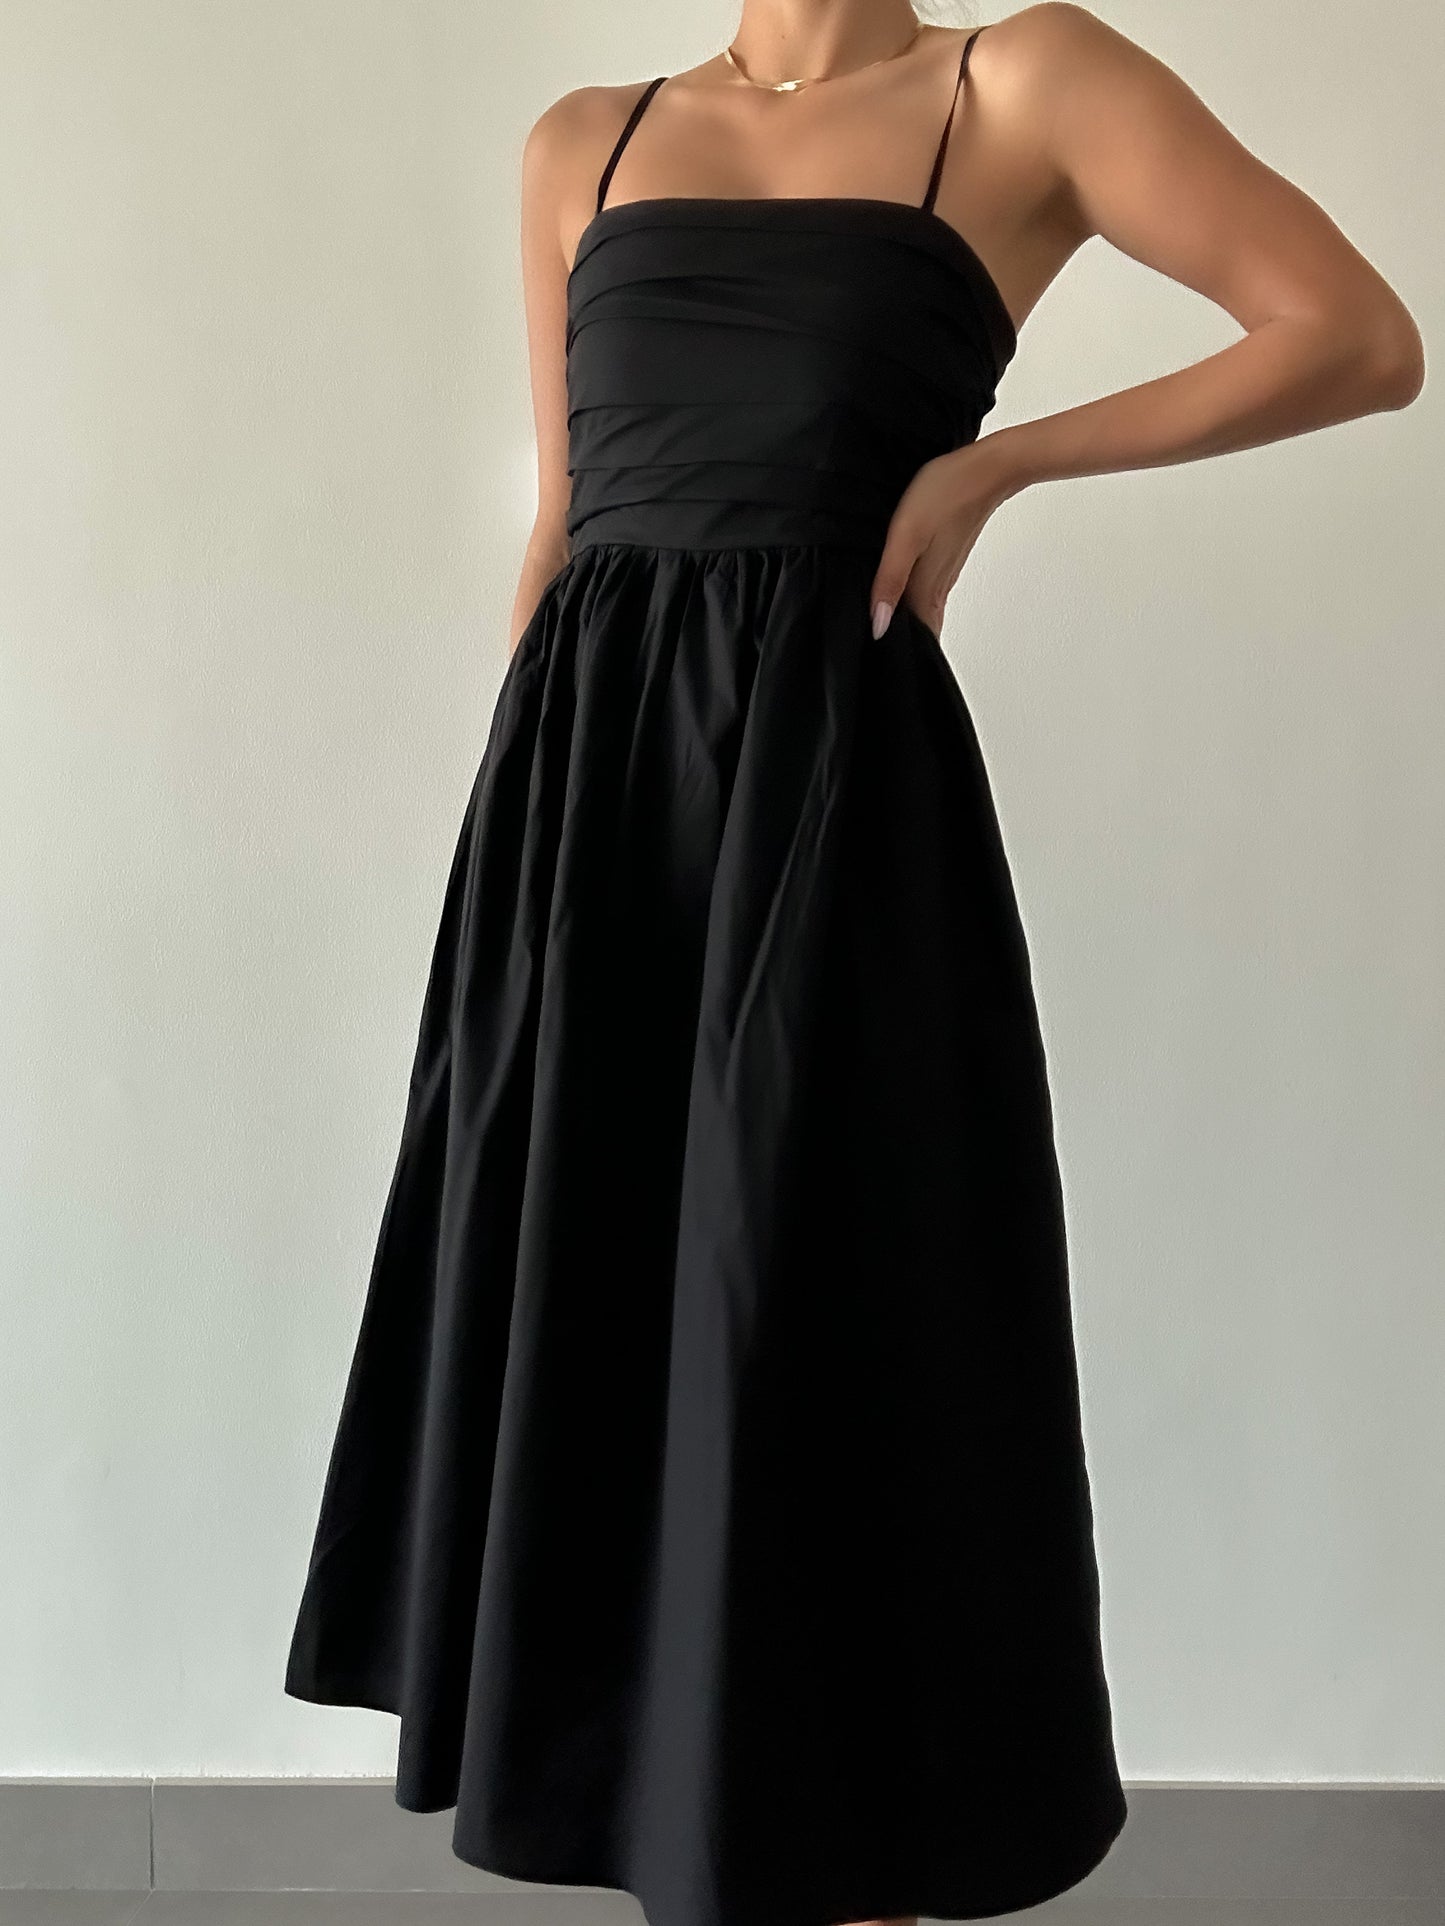 Carlie Summer Dress - Black